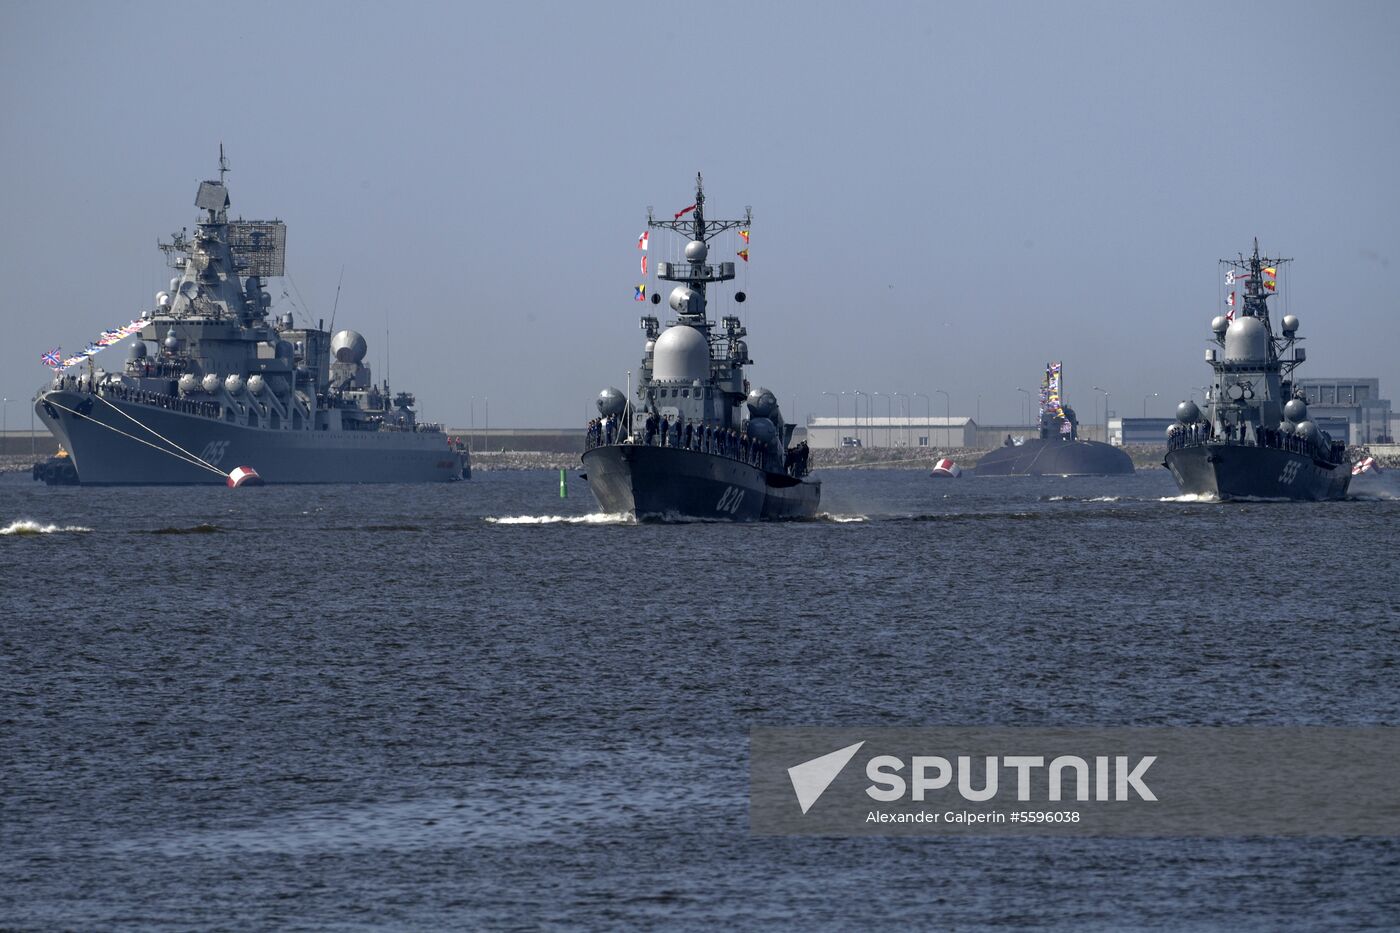 Navy Day parade rehearsal in Kronstadt